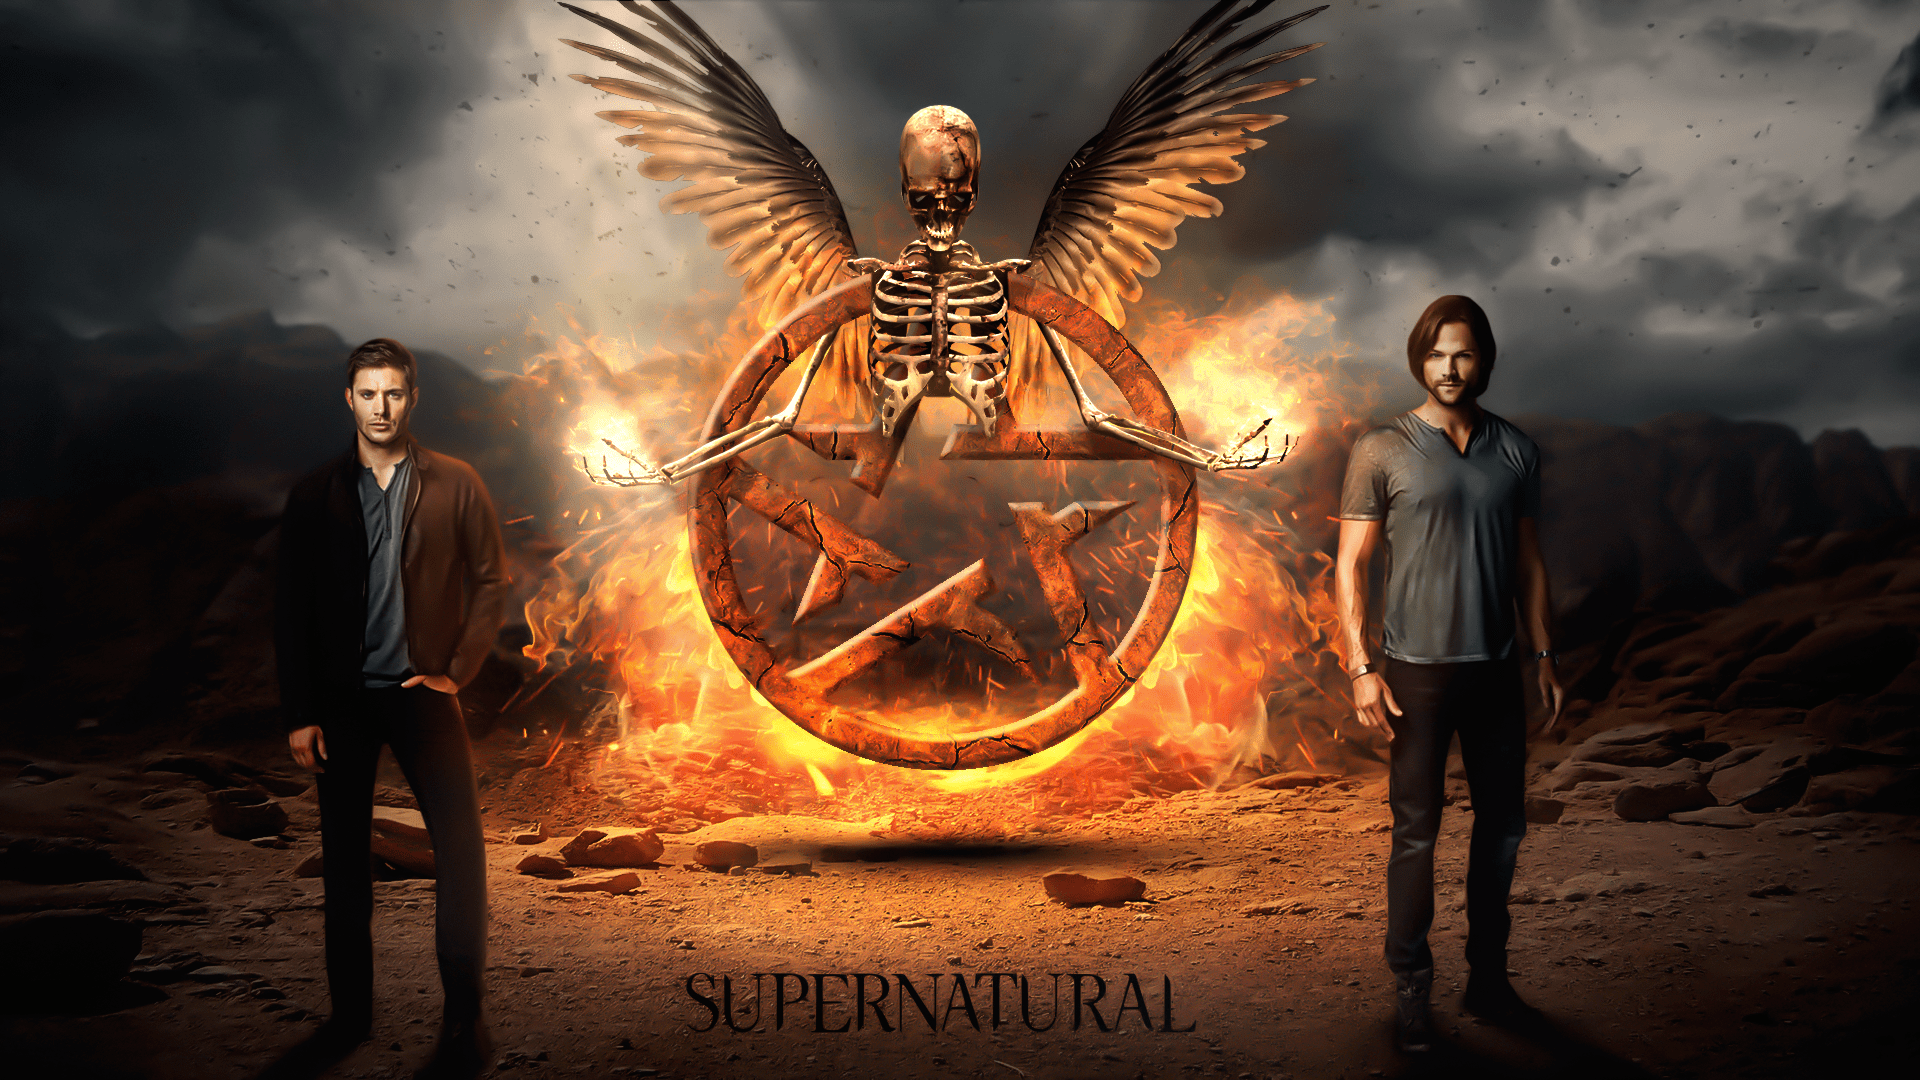 Supernatural Wallpaper Download. 